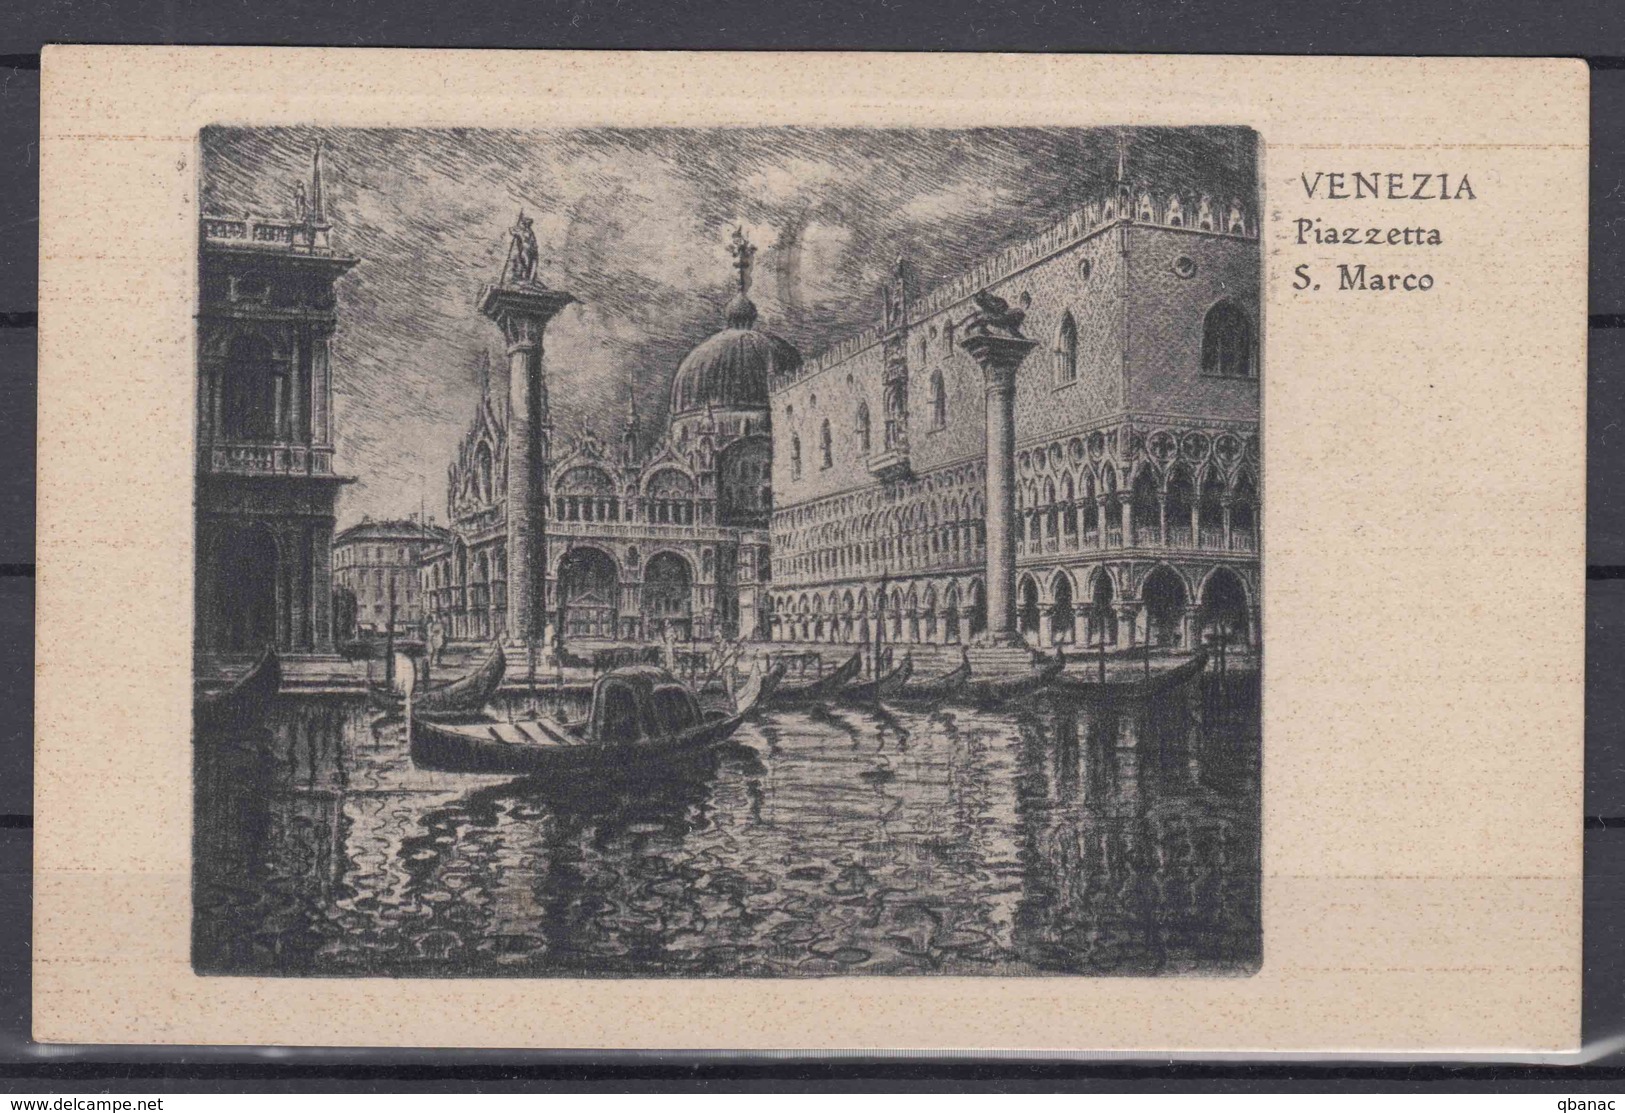 Postcard Travelled To Yugoslavia, Venezia Piazzetta S. Marco - Venezia (Venice)